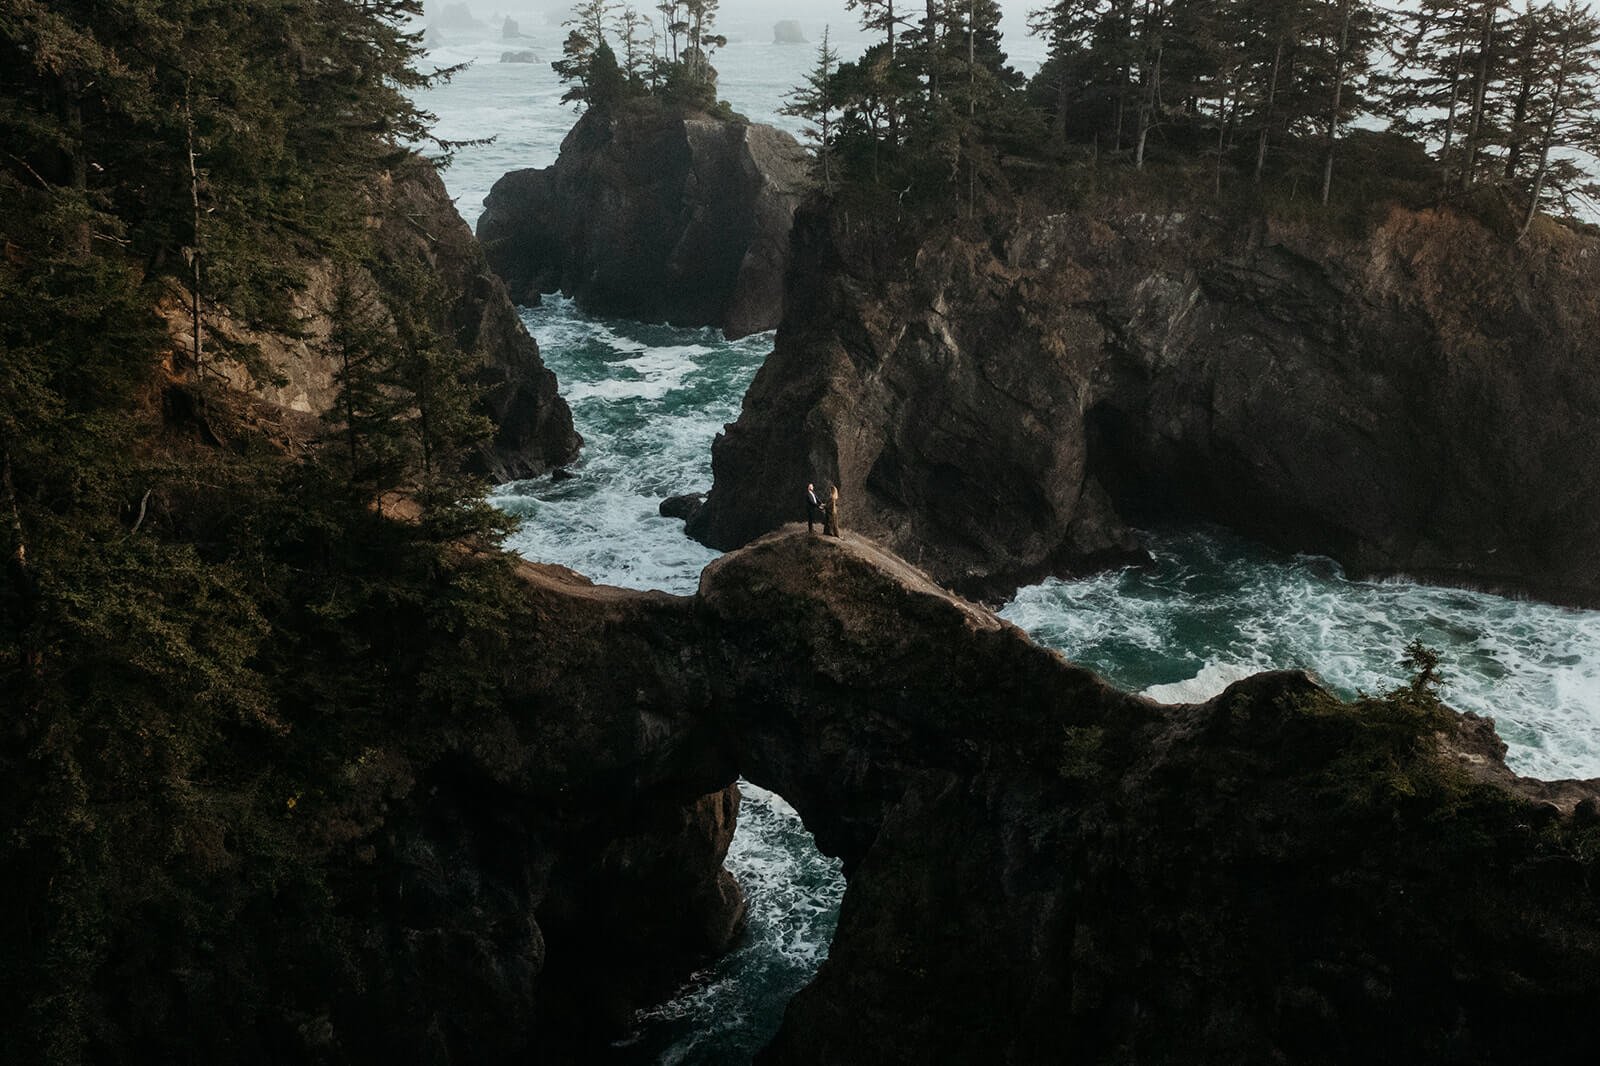 Couple photo session on the cliffs at the Oregon Coast